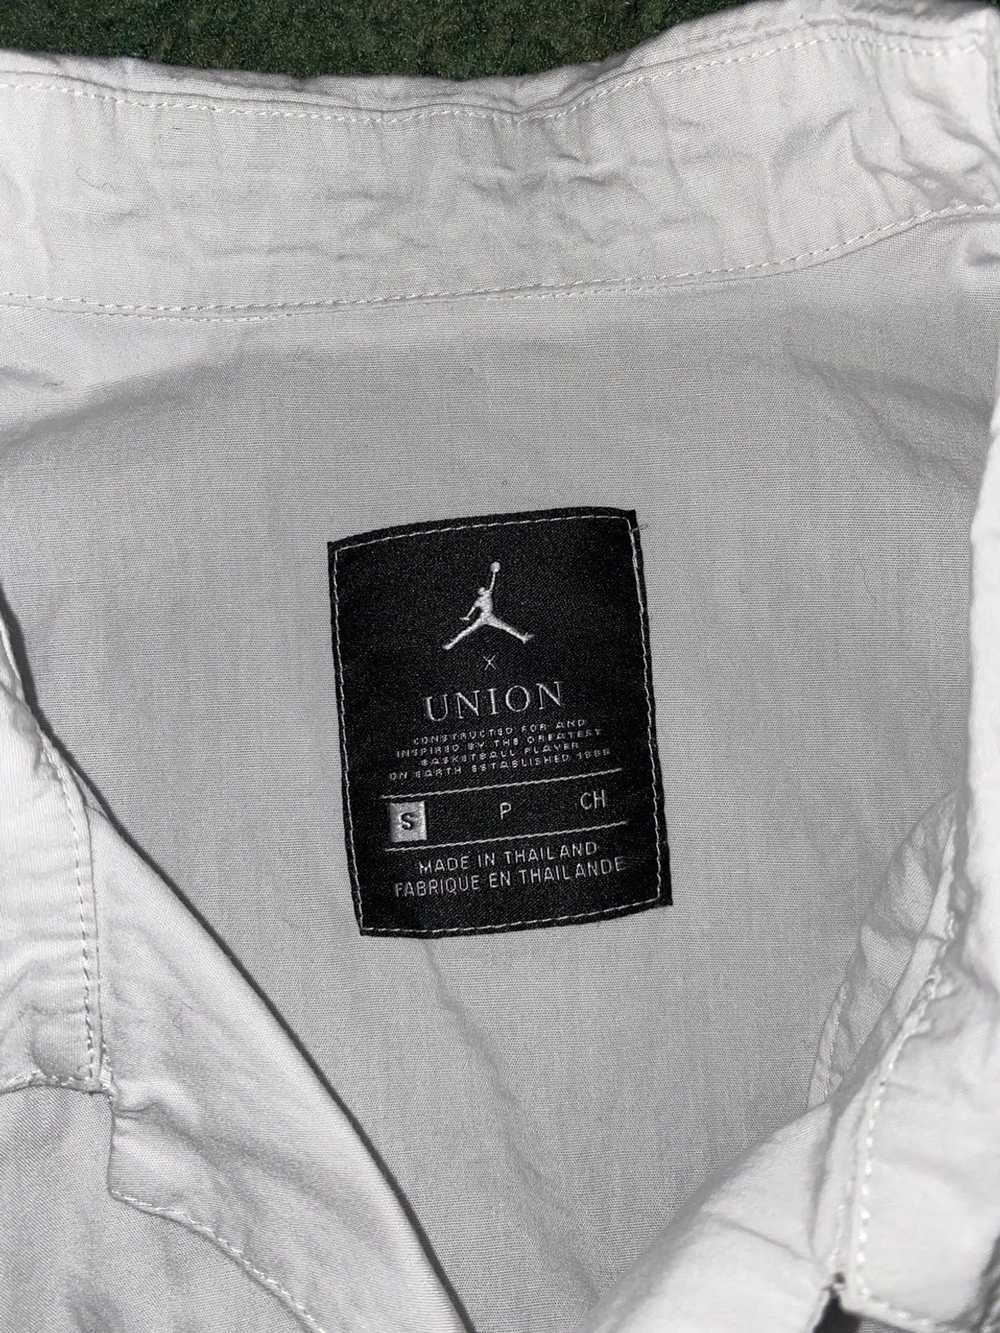 Jordan Brand Jordan Union Mechanic Shirt - image 4